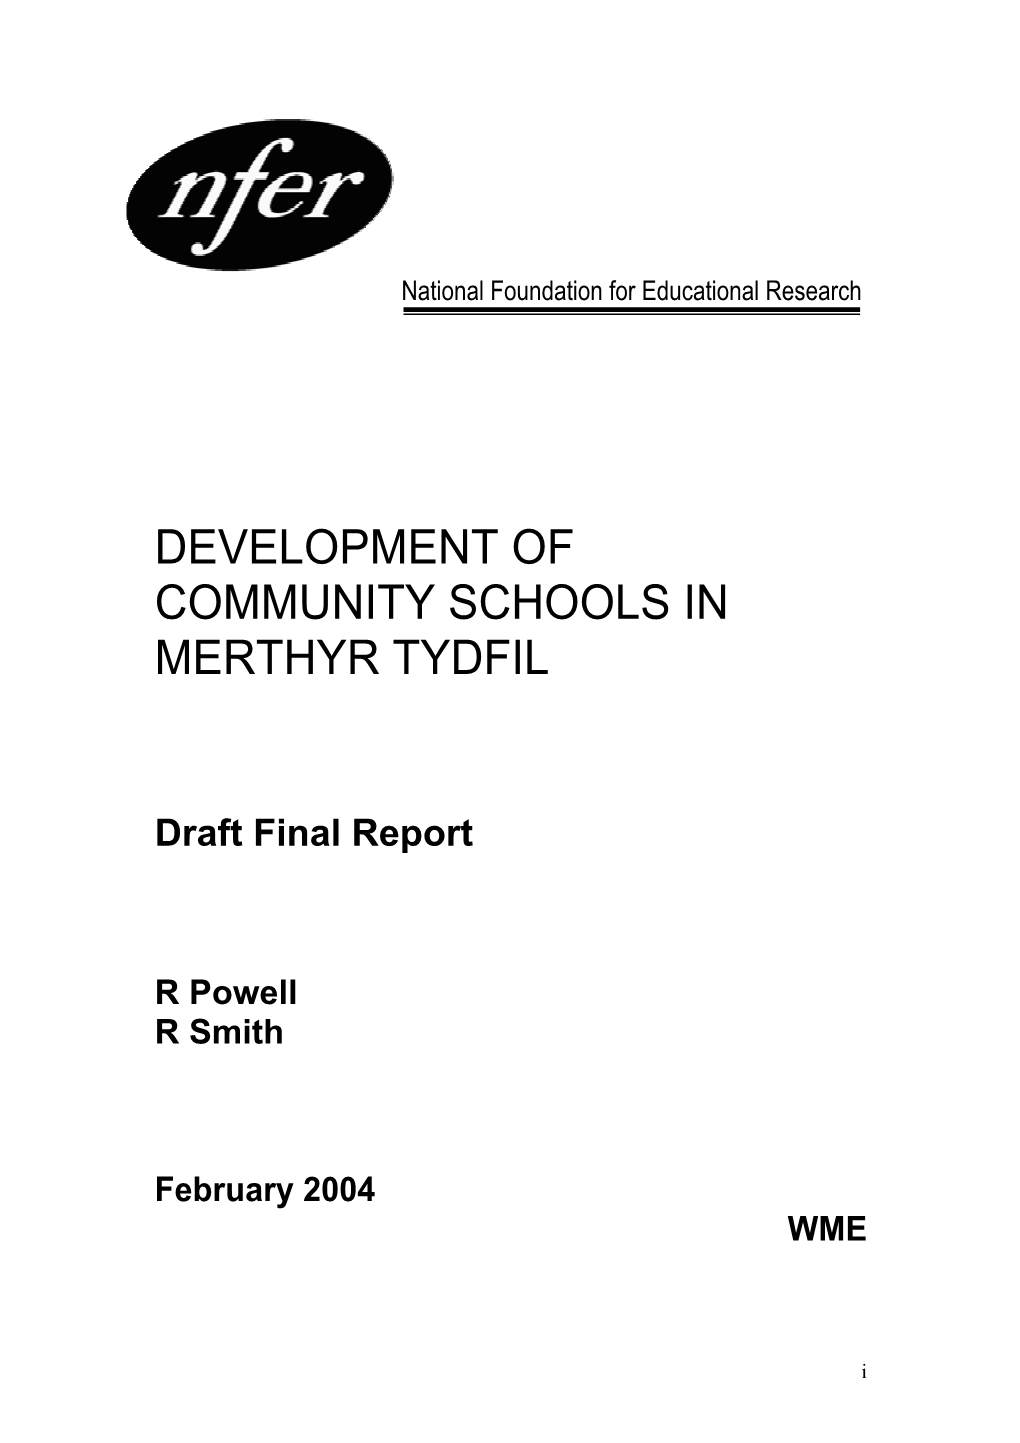 Development of Community Schools in Merthyr Tydfil